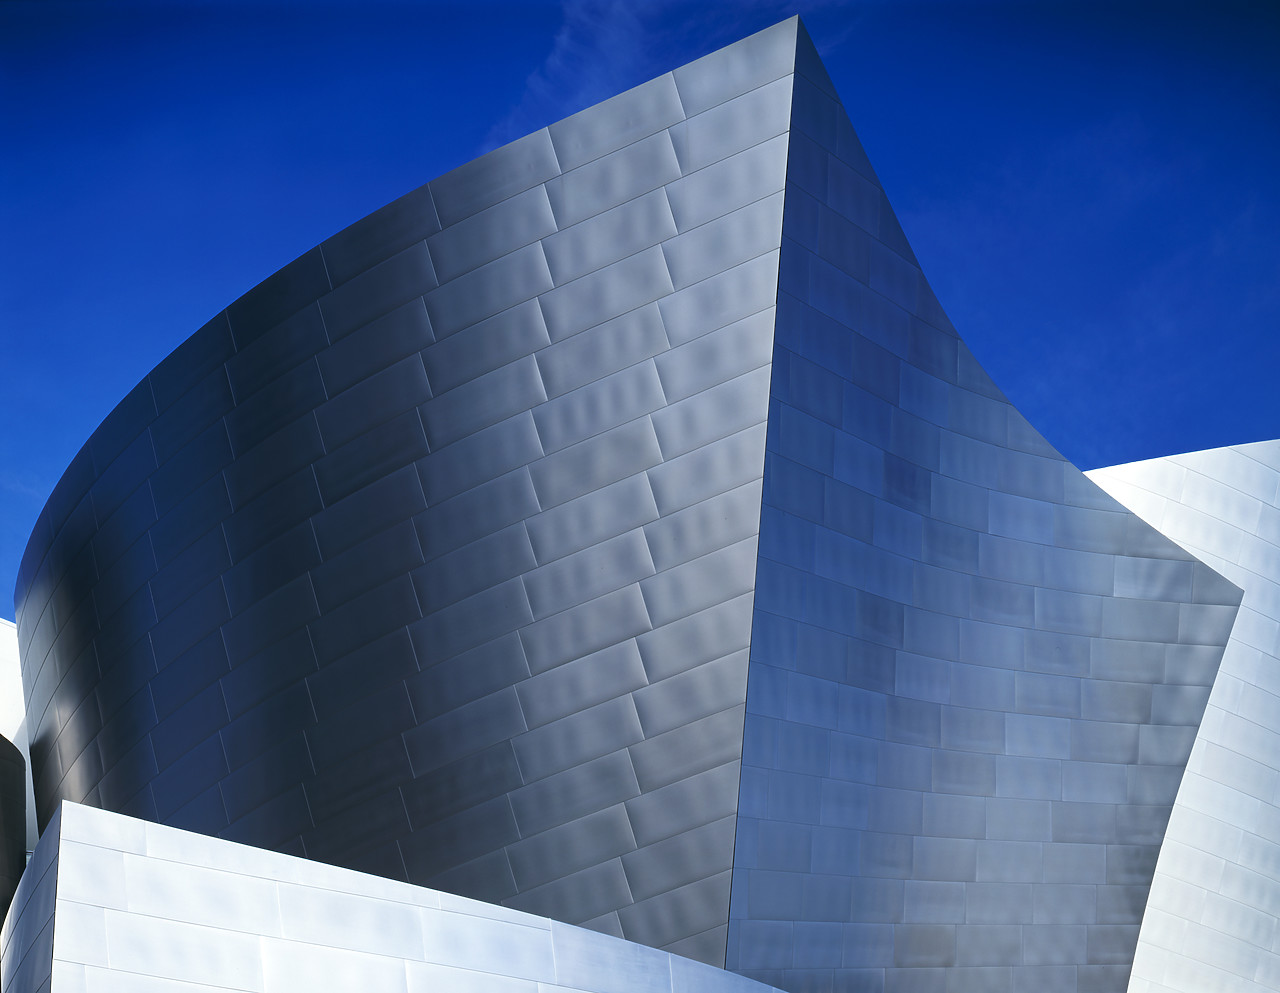 #040051-1 - Disney Concert Hall, Los Angeles, California, USA